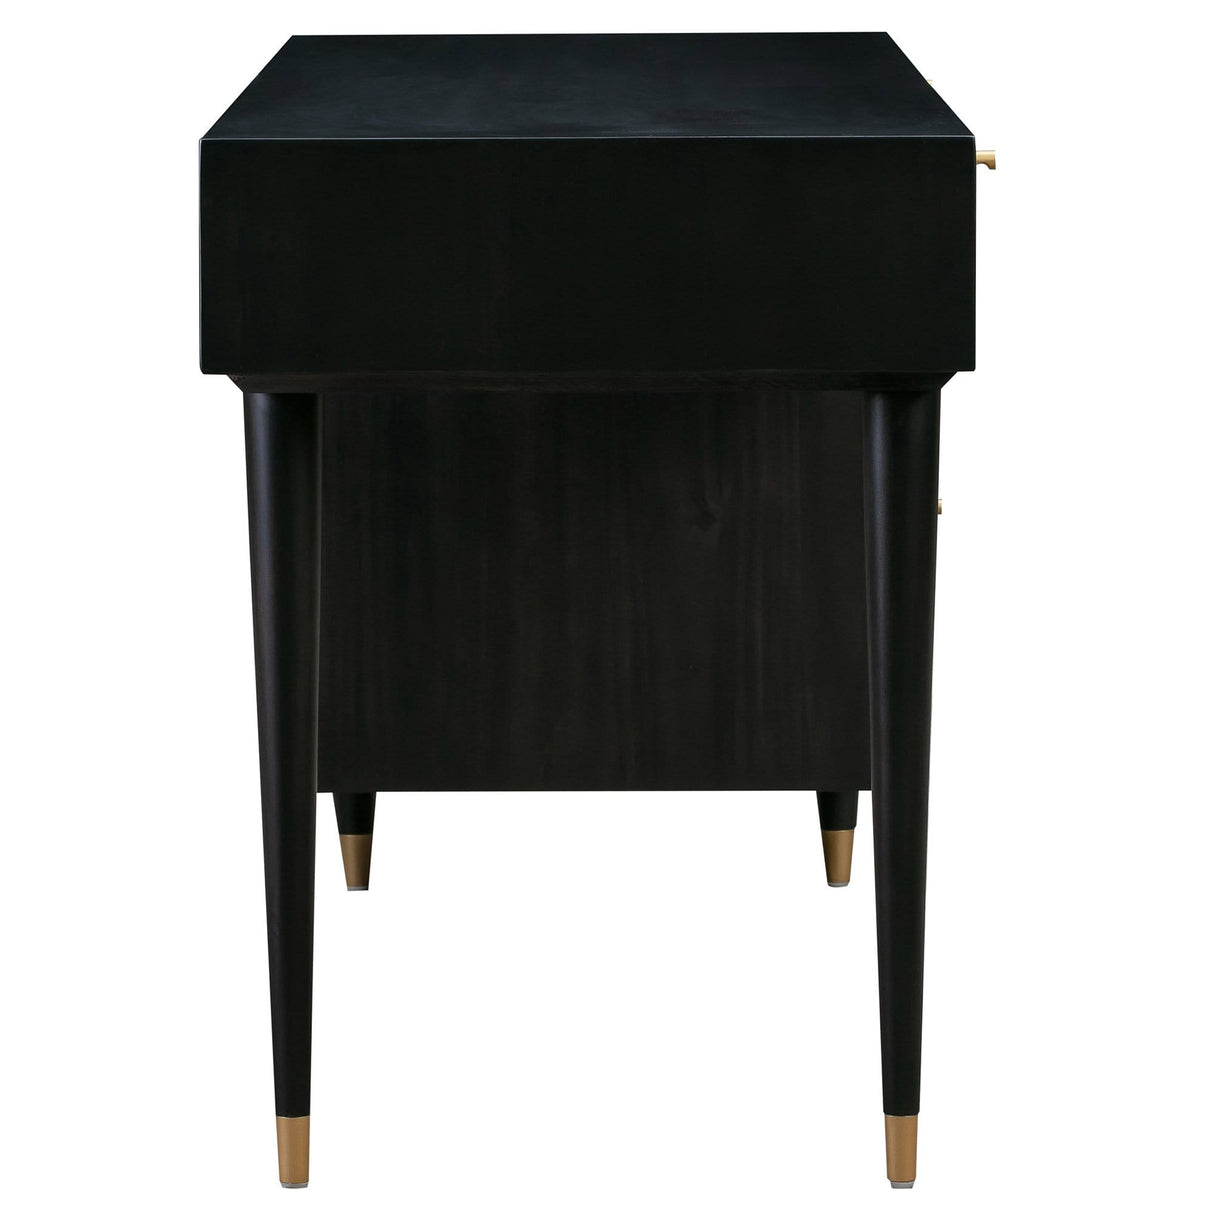 Candelabra Home Sierra Noir Desk Furniture